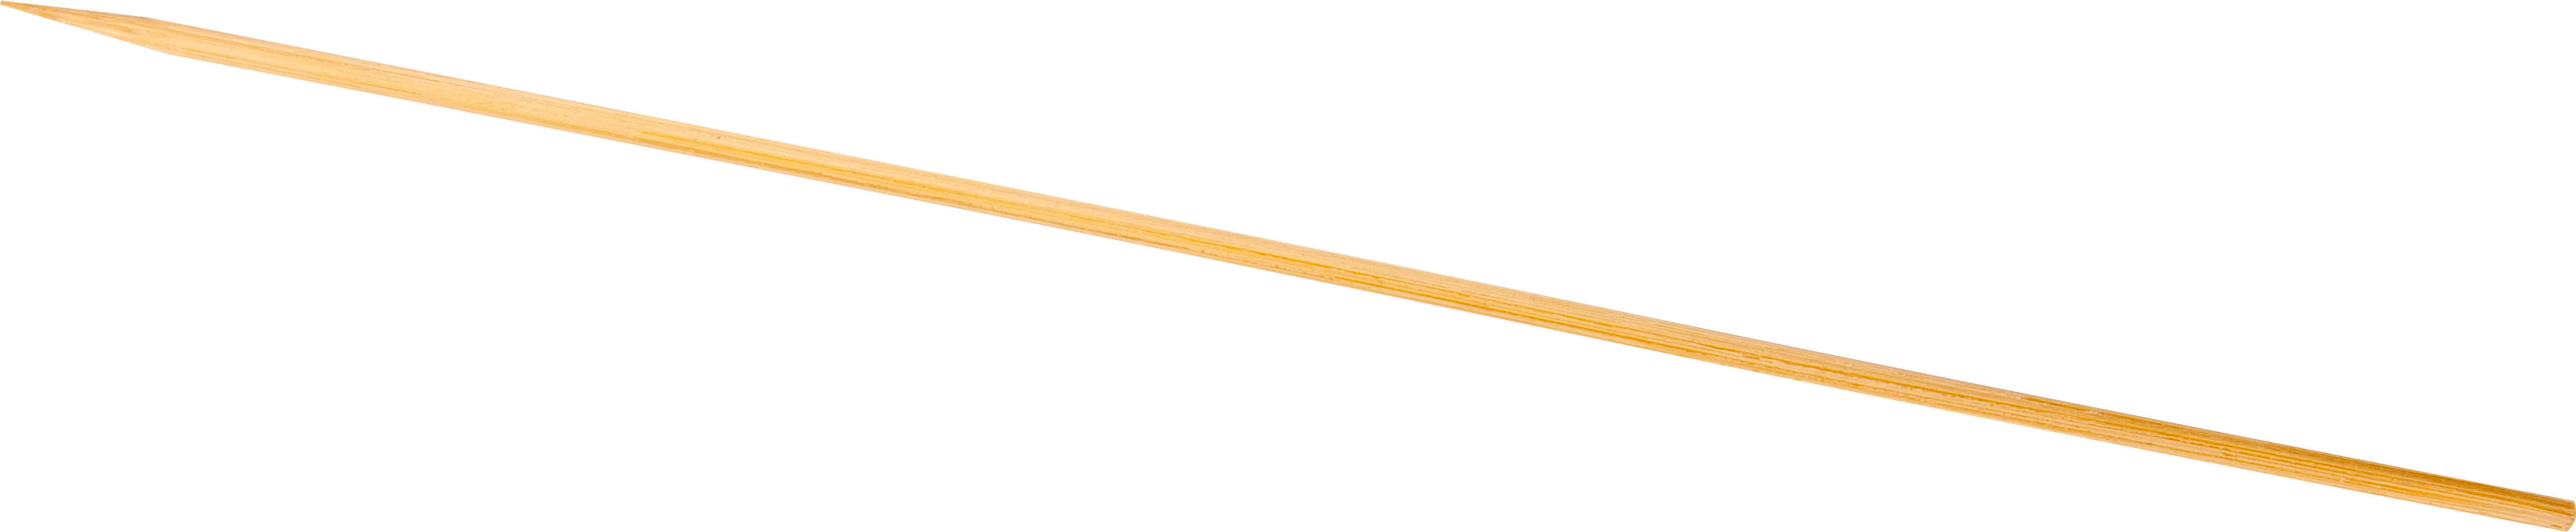 Bambus Spieße - 20,0cm (250 Stk.)